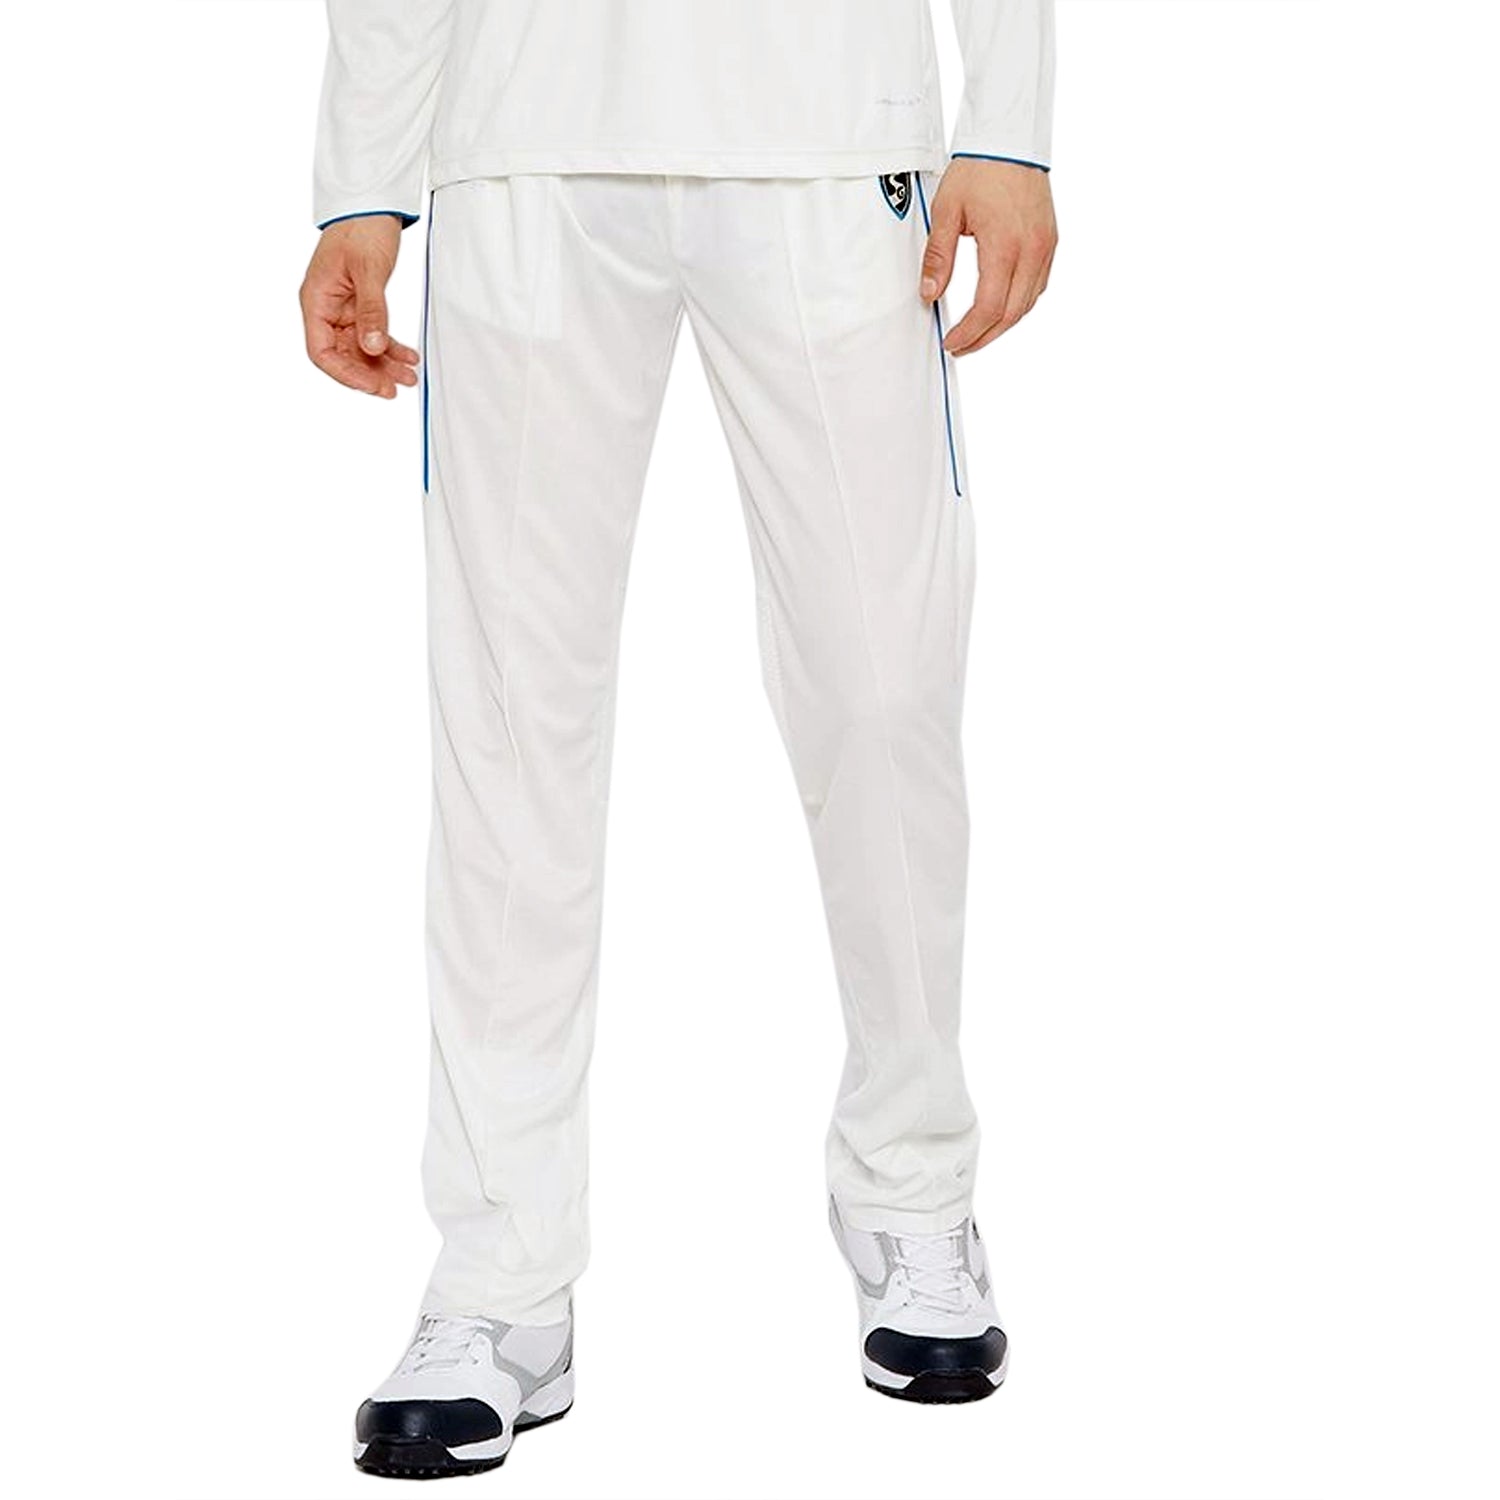 Cricket Training Dress Mesh Jersey Trousers Set White Alpha for men  womenkids Boys